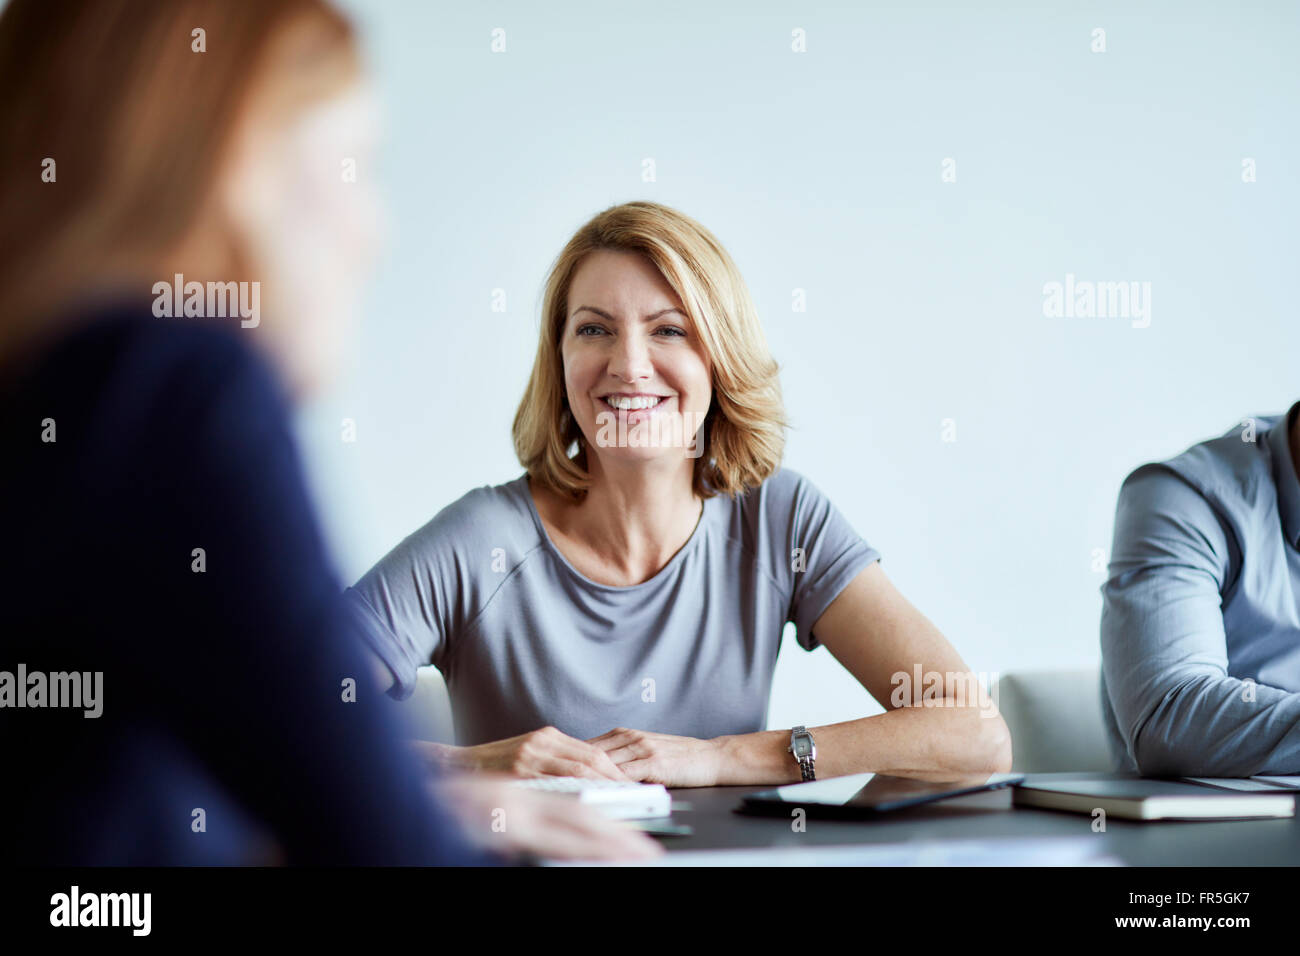 Confident businesswoman in meeting Stock Photo